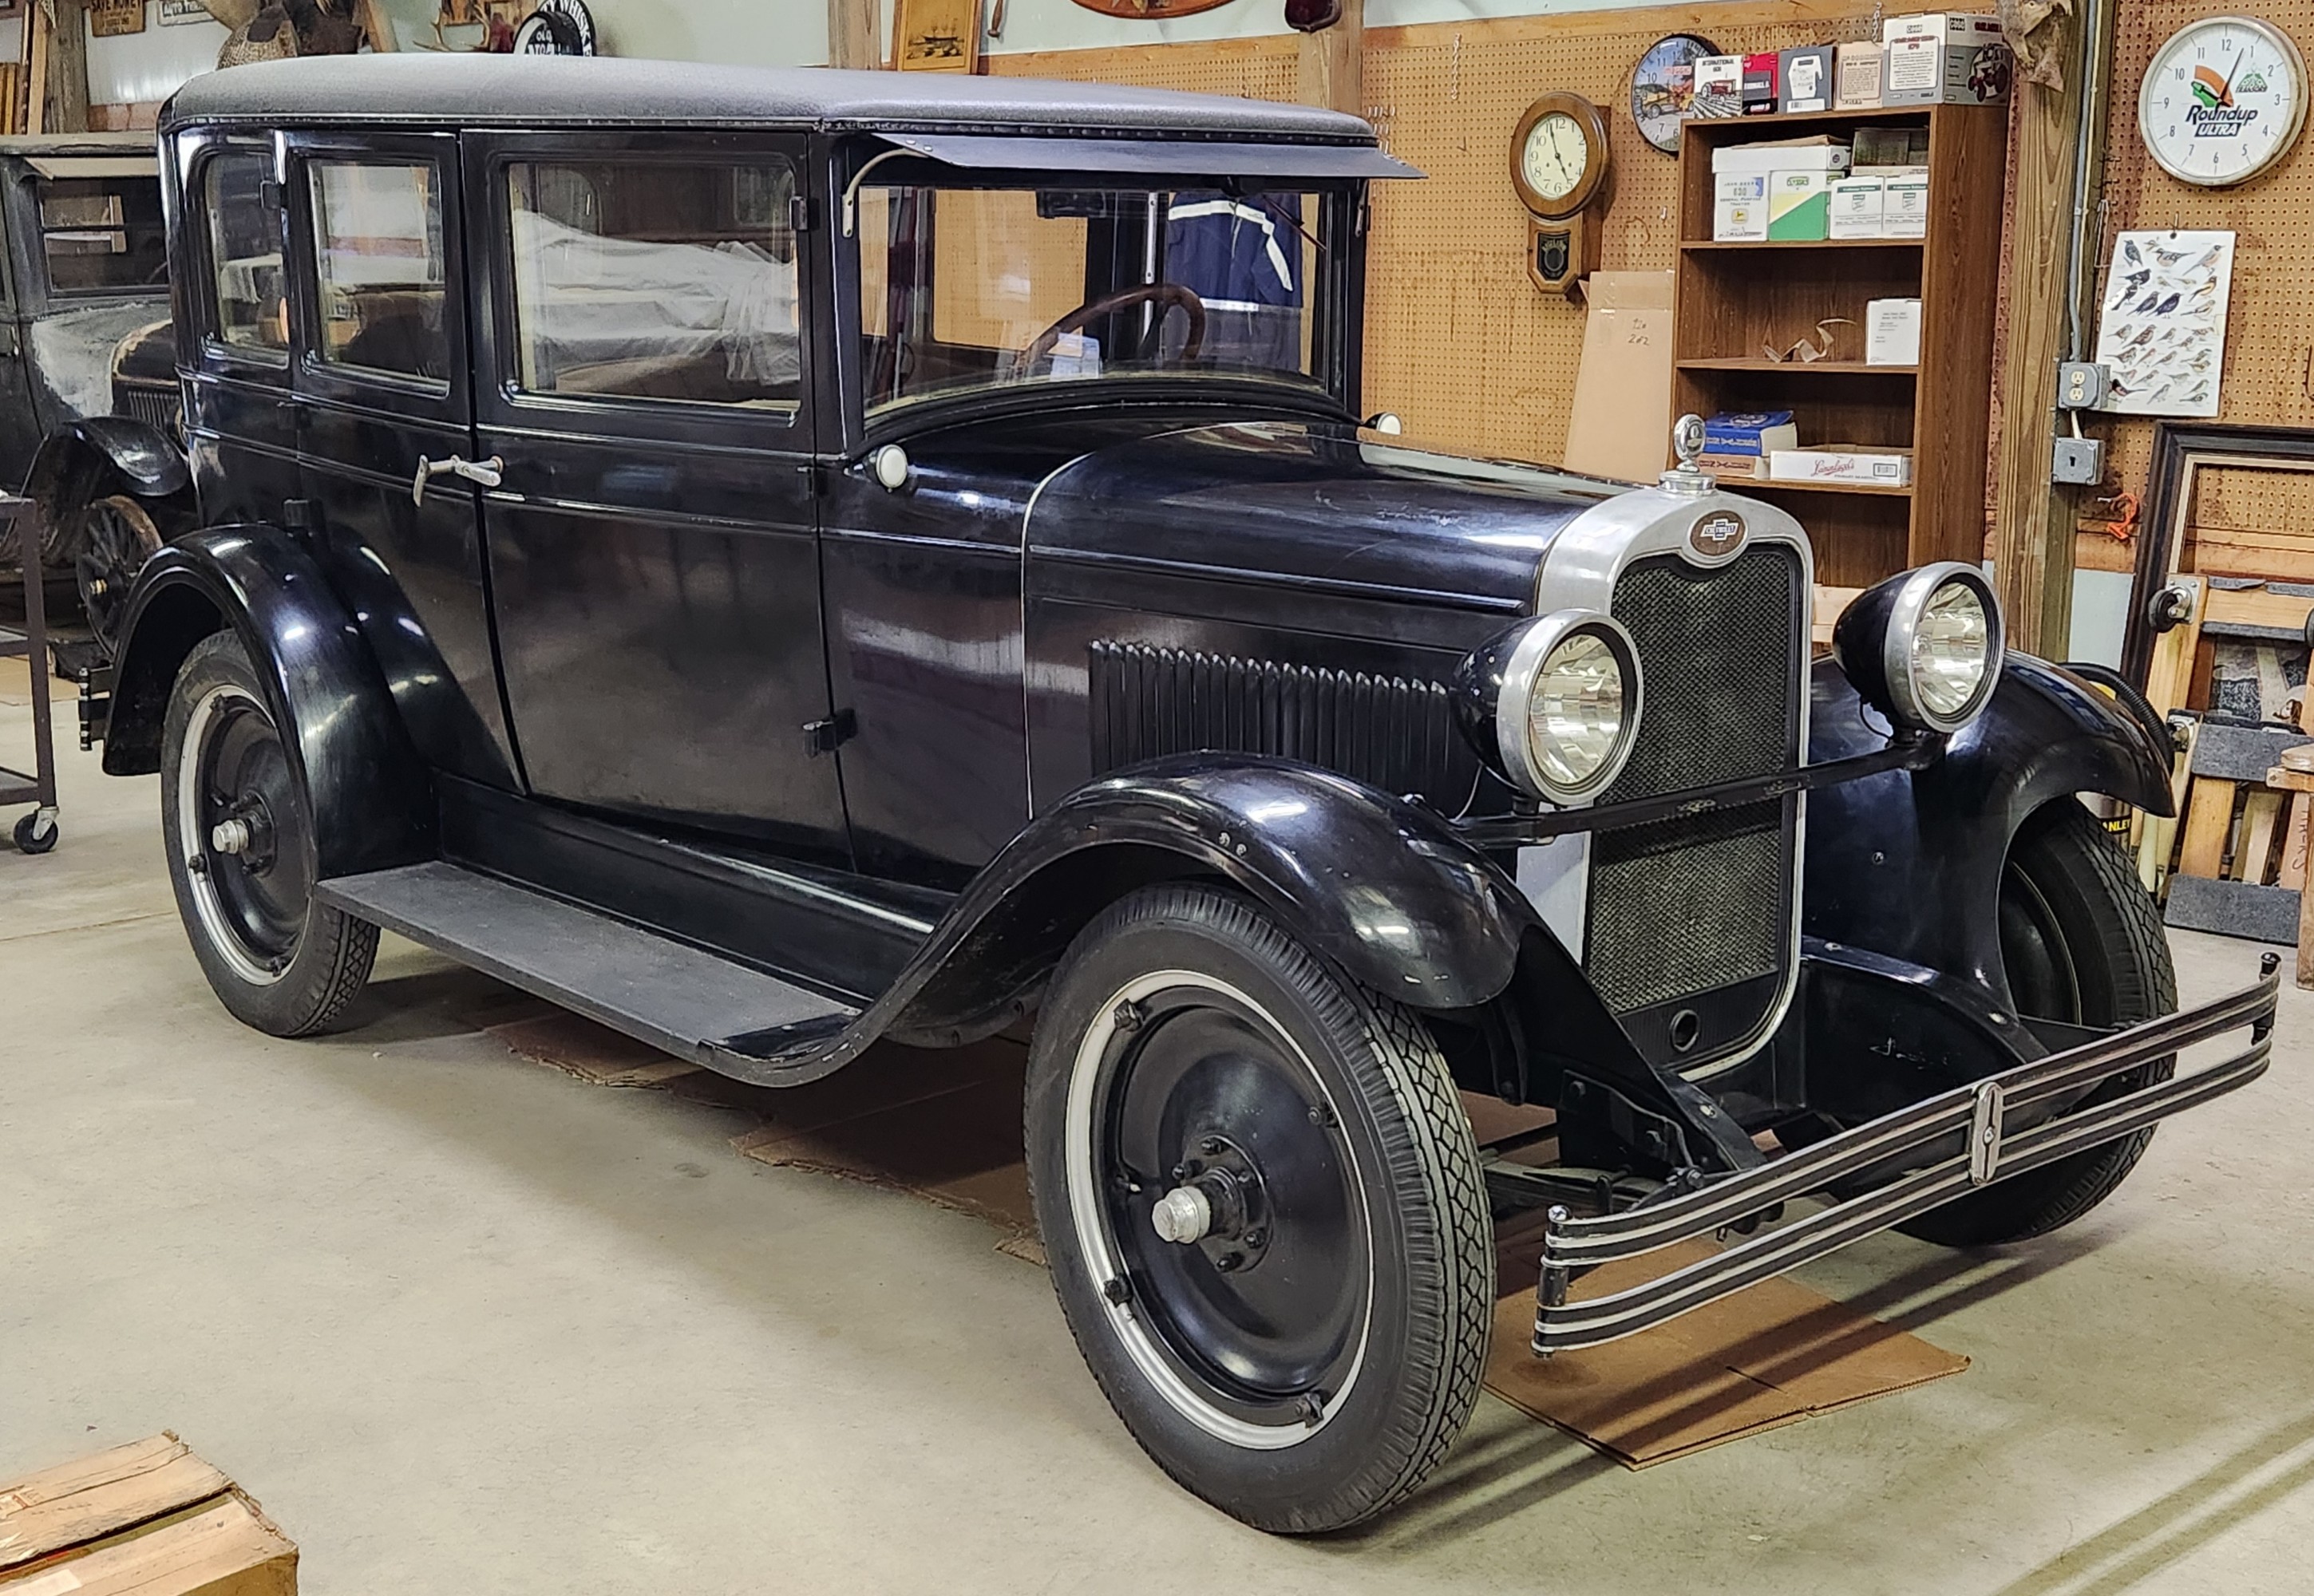 Item: 1928 Chevrolet Sedan - Nice